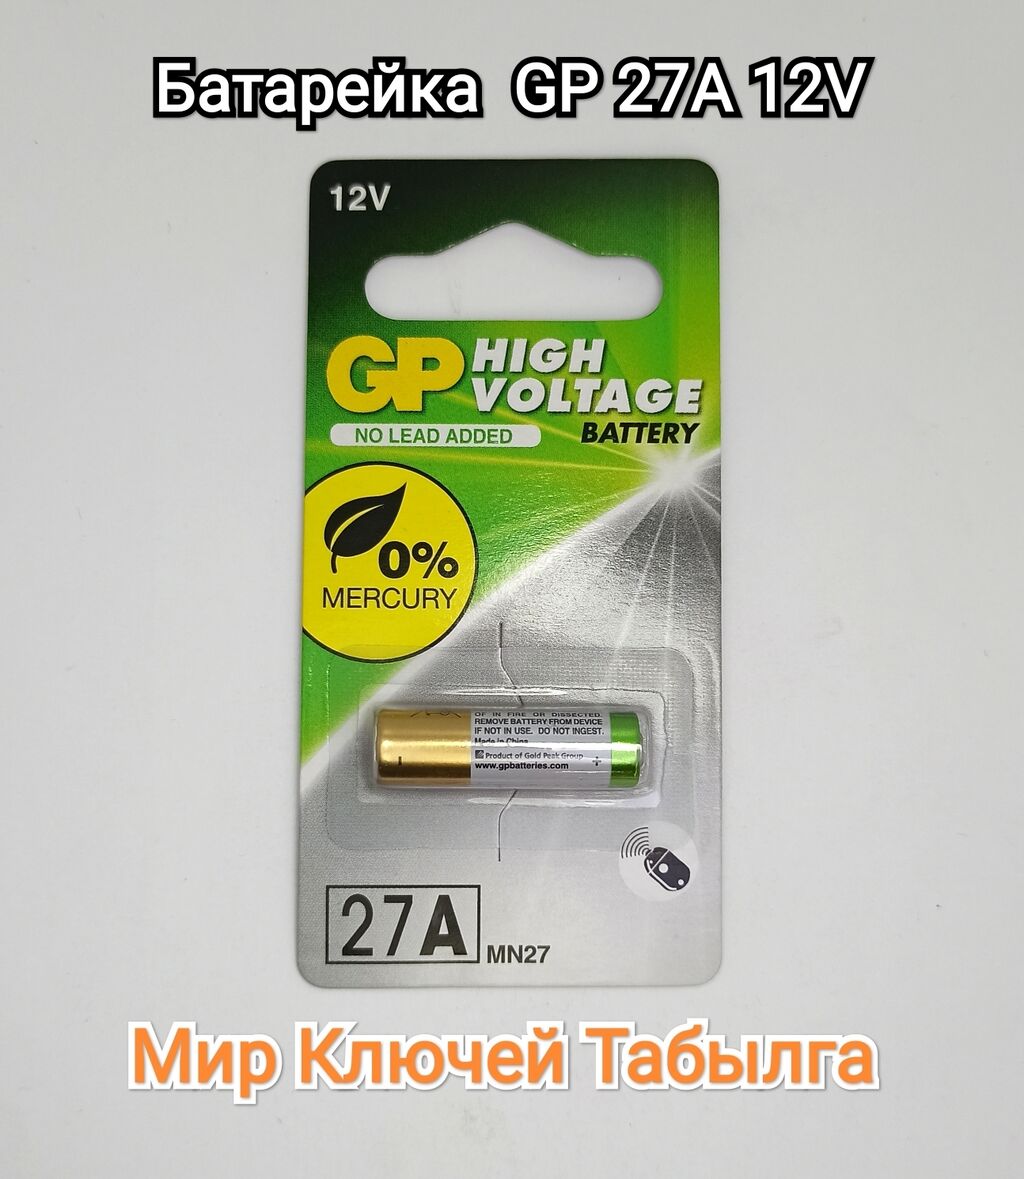 Батарейка 27a 12v